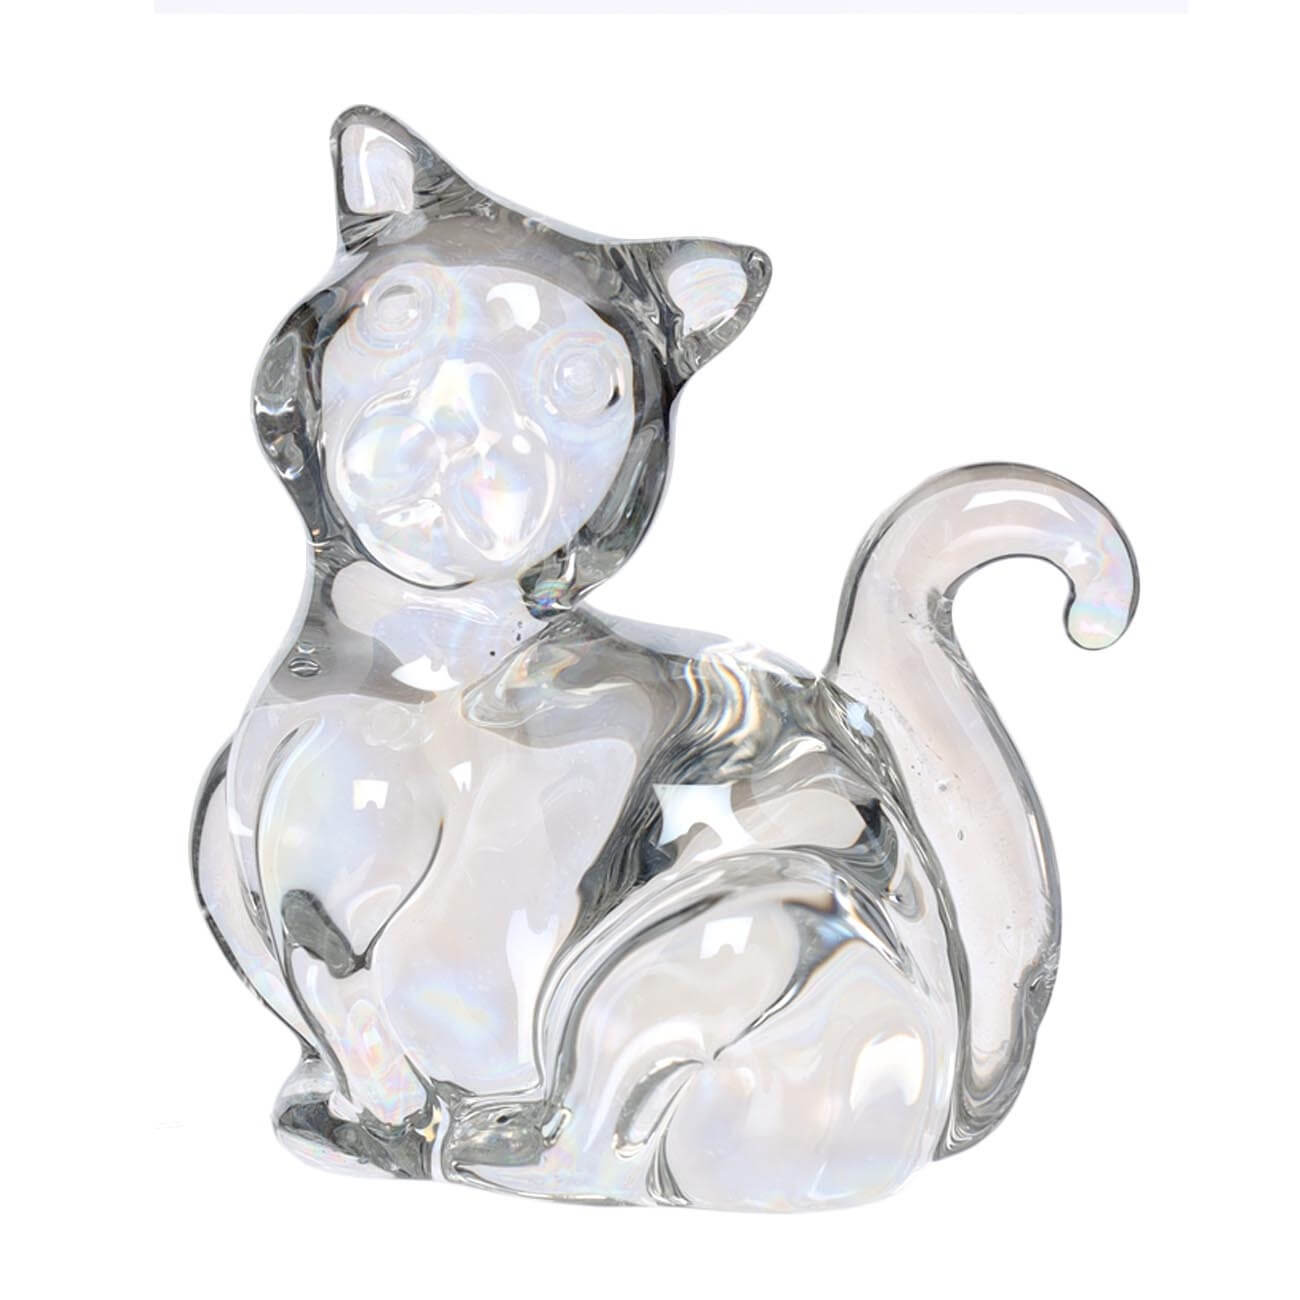 Statuette, 5 cm, glass, Mother of pearl, Cat, Cat изображение № 1